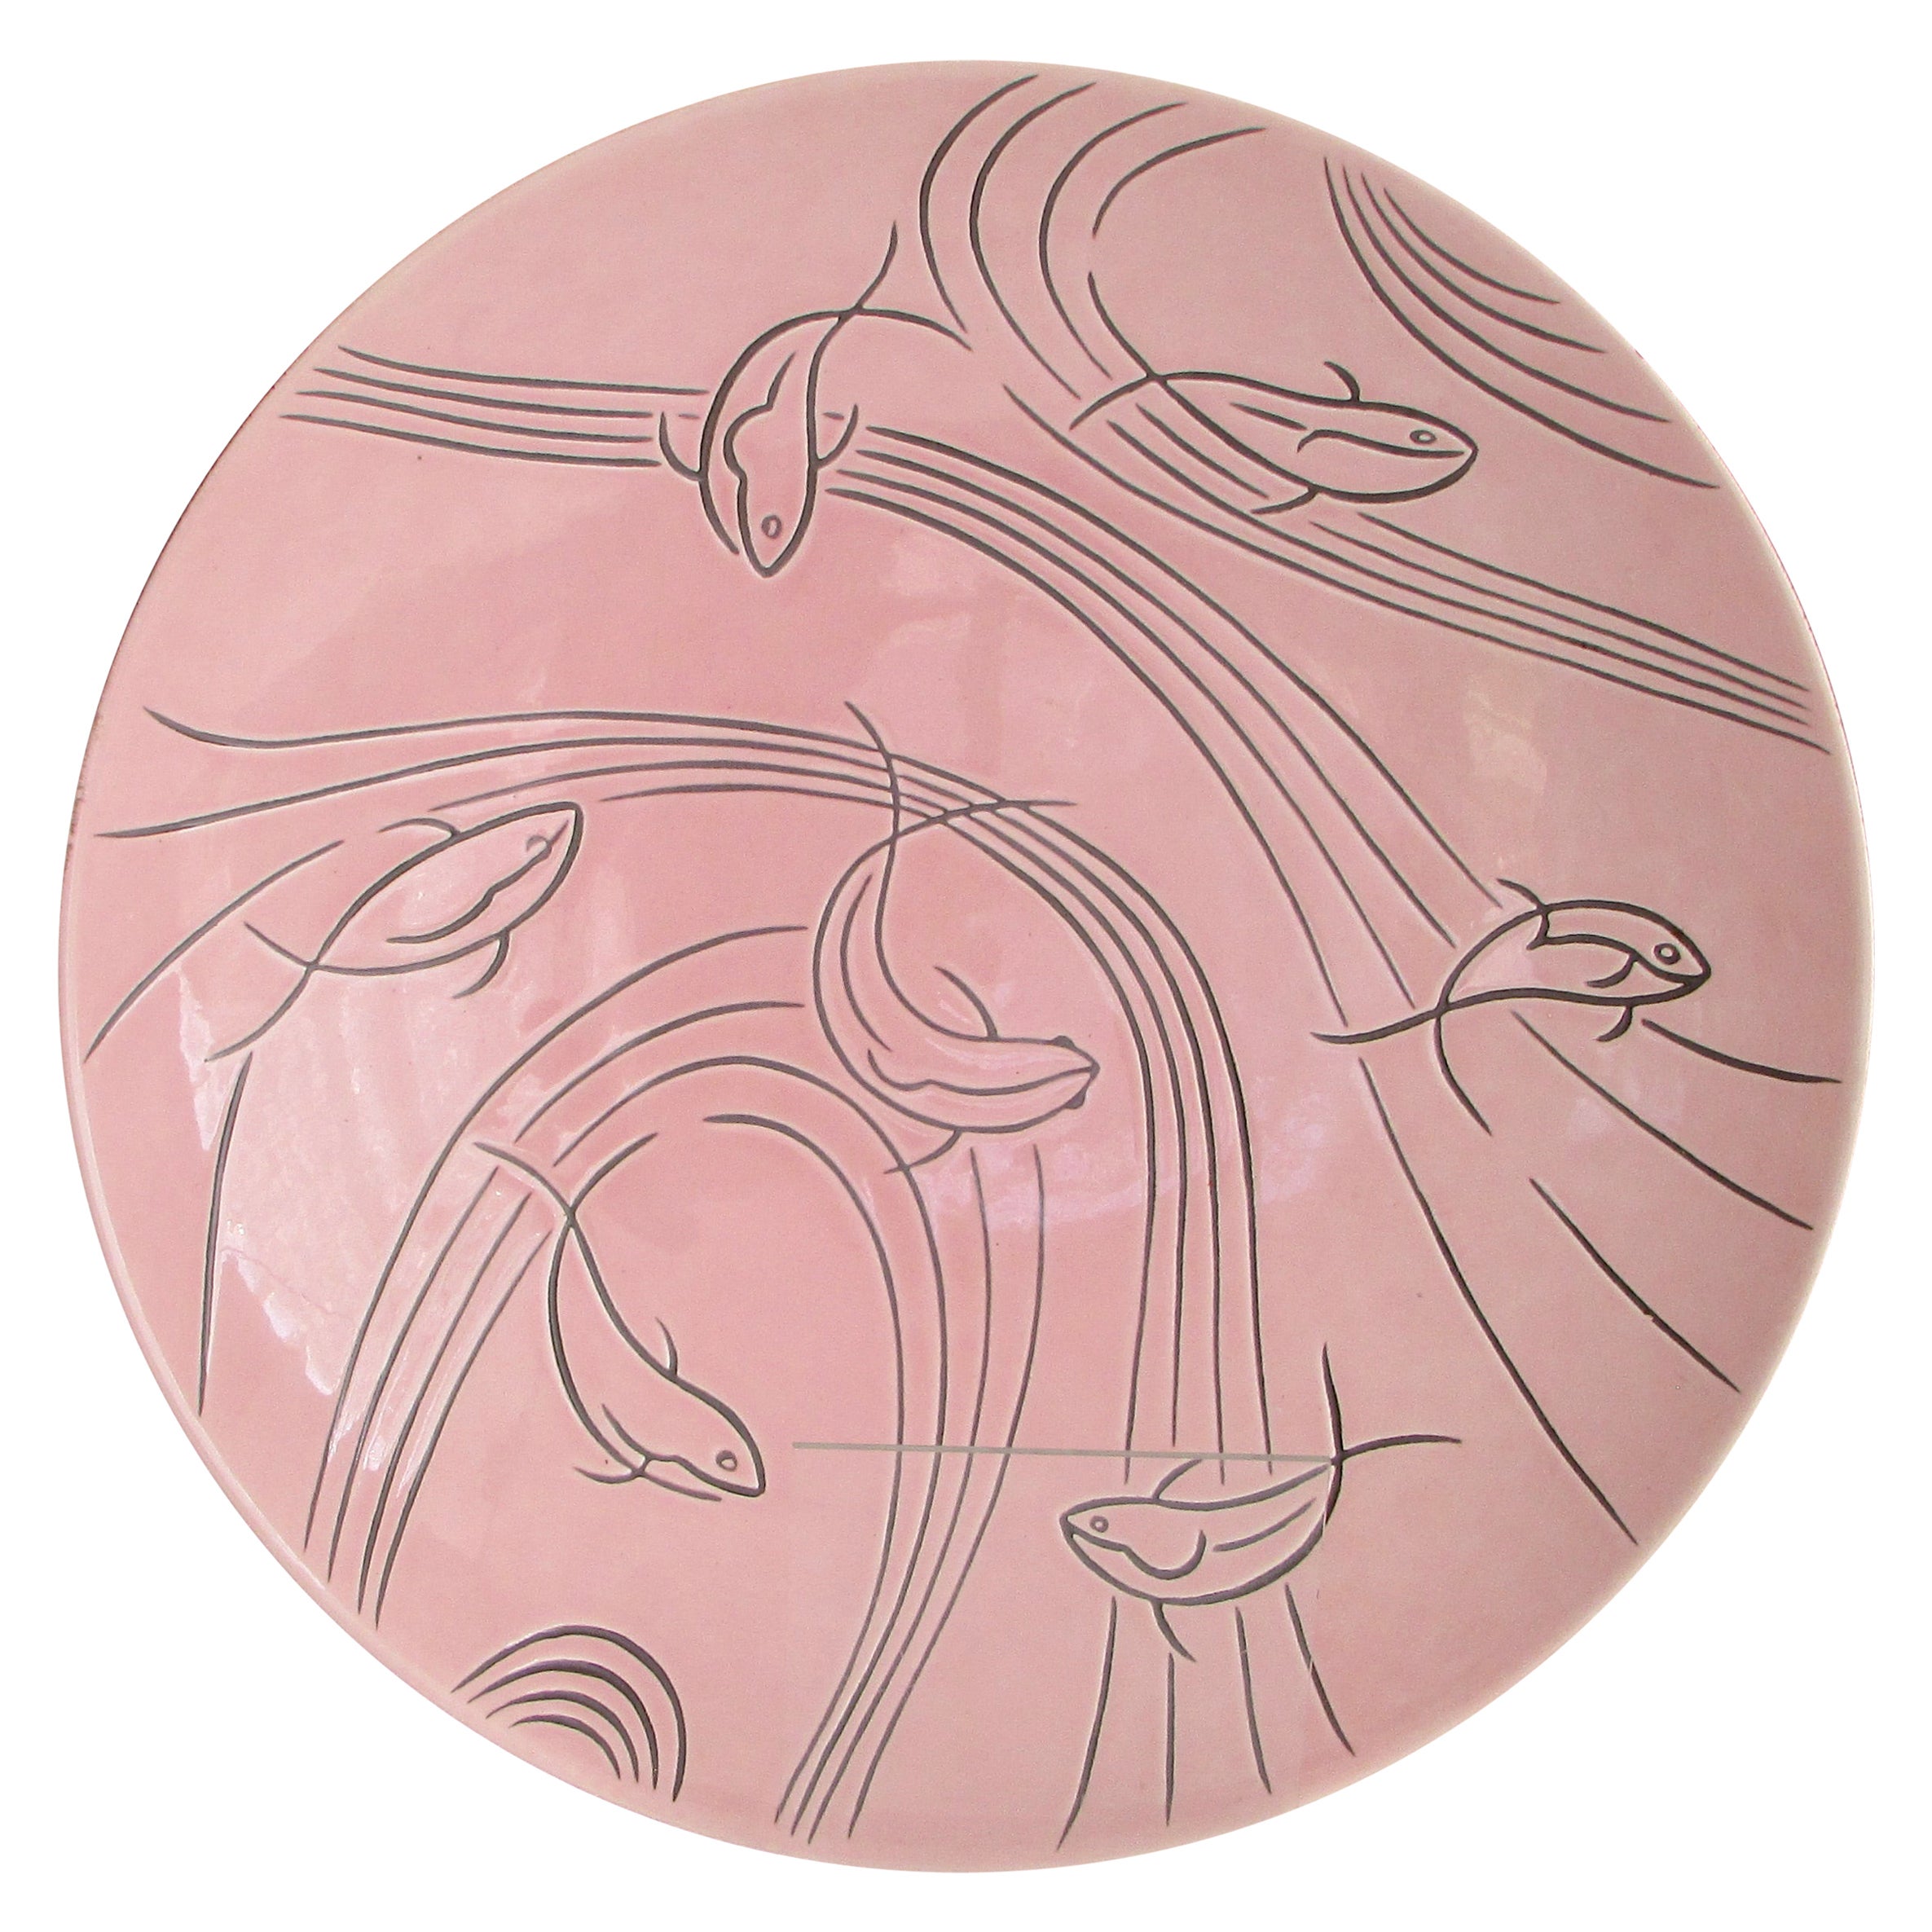 Roselane Pottery of Pasadena Pink Salad Bowl with Incised Modernist Fish Design For Sale